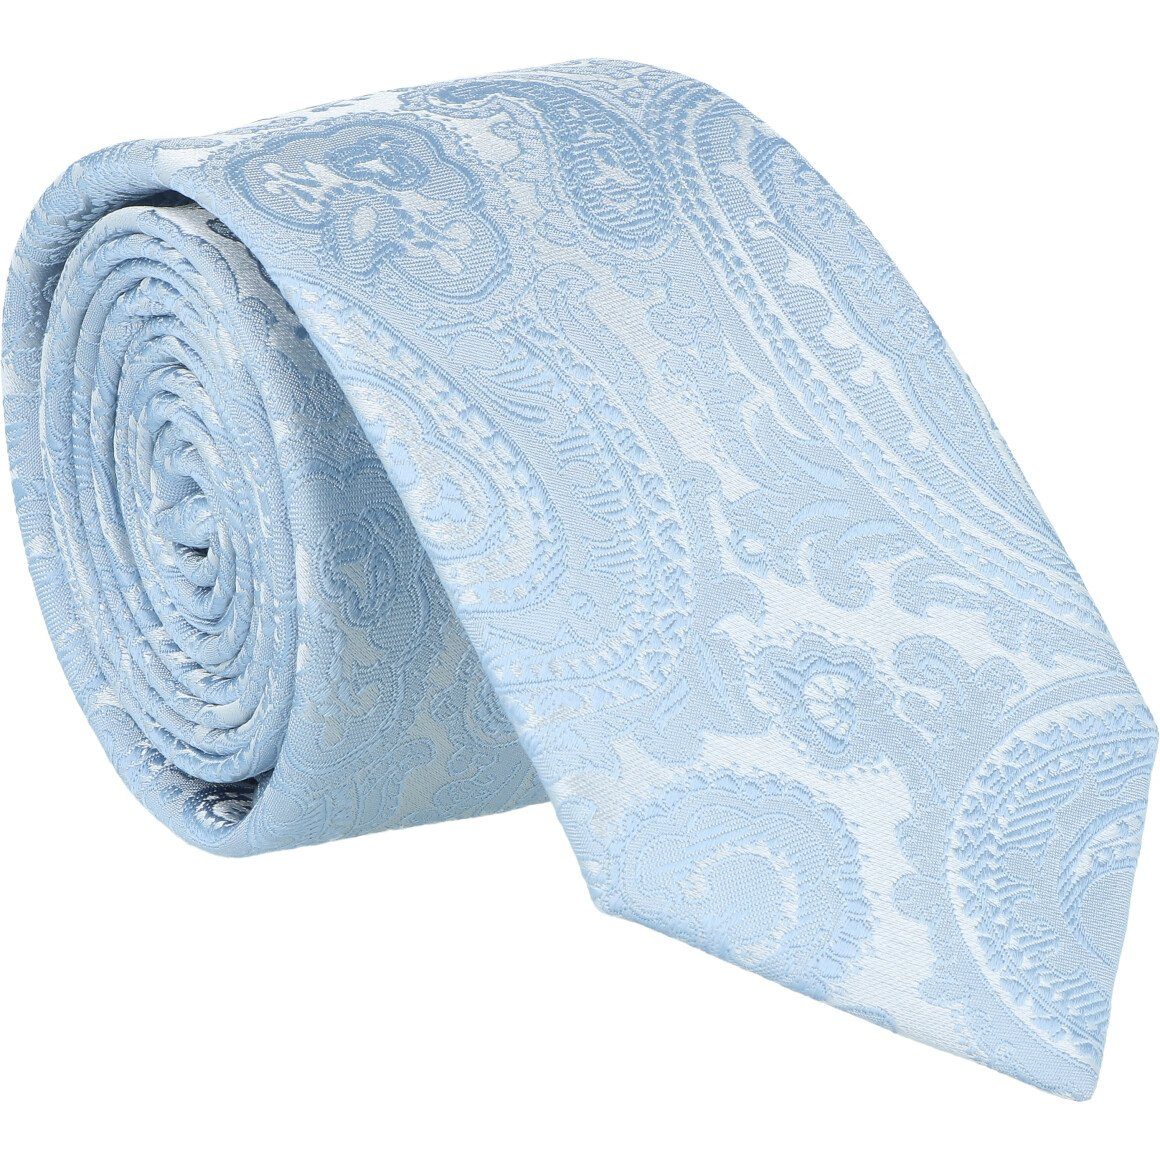 WILLEN Krawatte blau